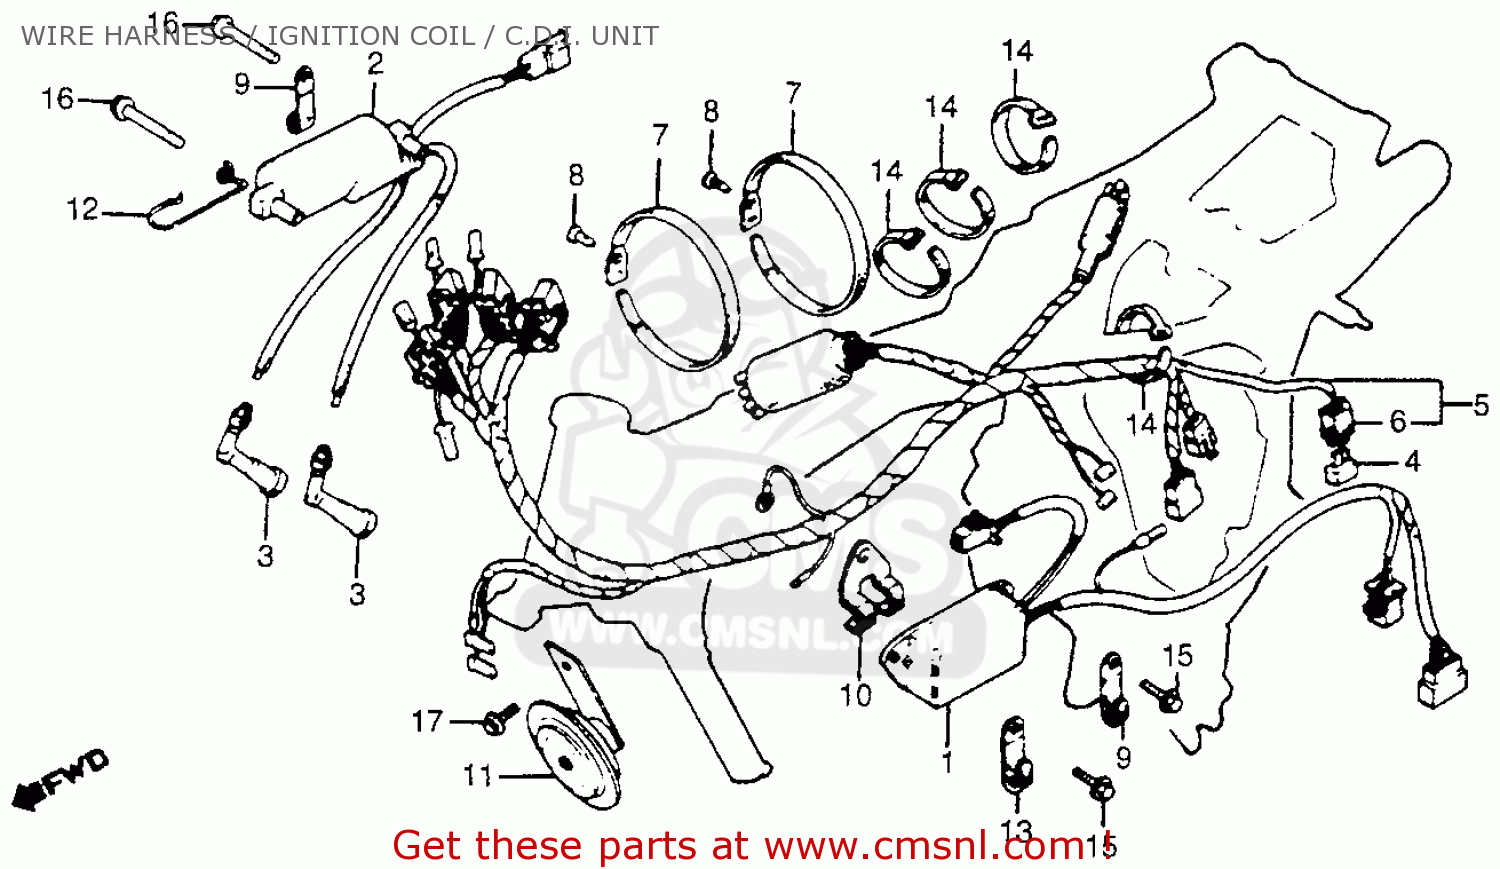 Honda CM400T 1981 (B) USA WIRE HARNESS / IGNITION COIL / C ... bmw 633csi wiring diagram 